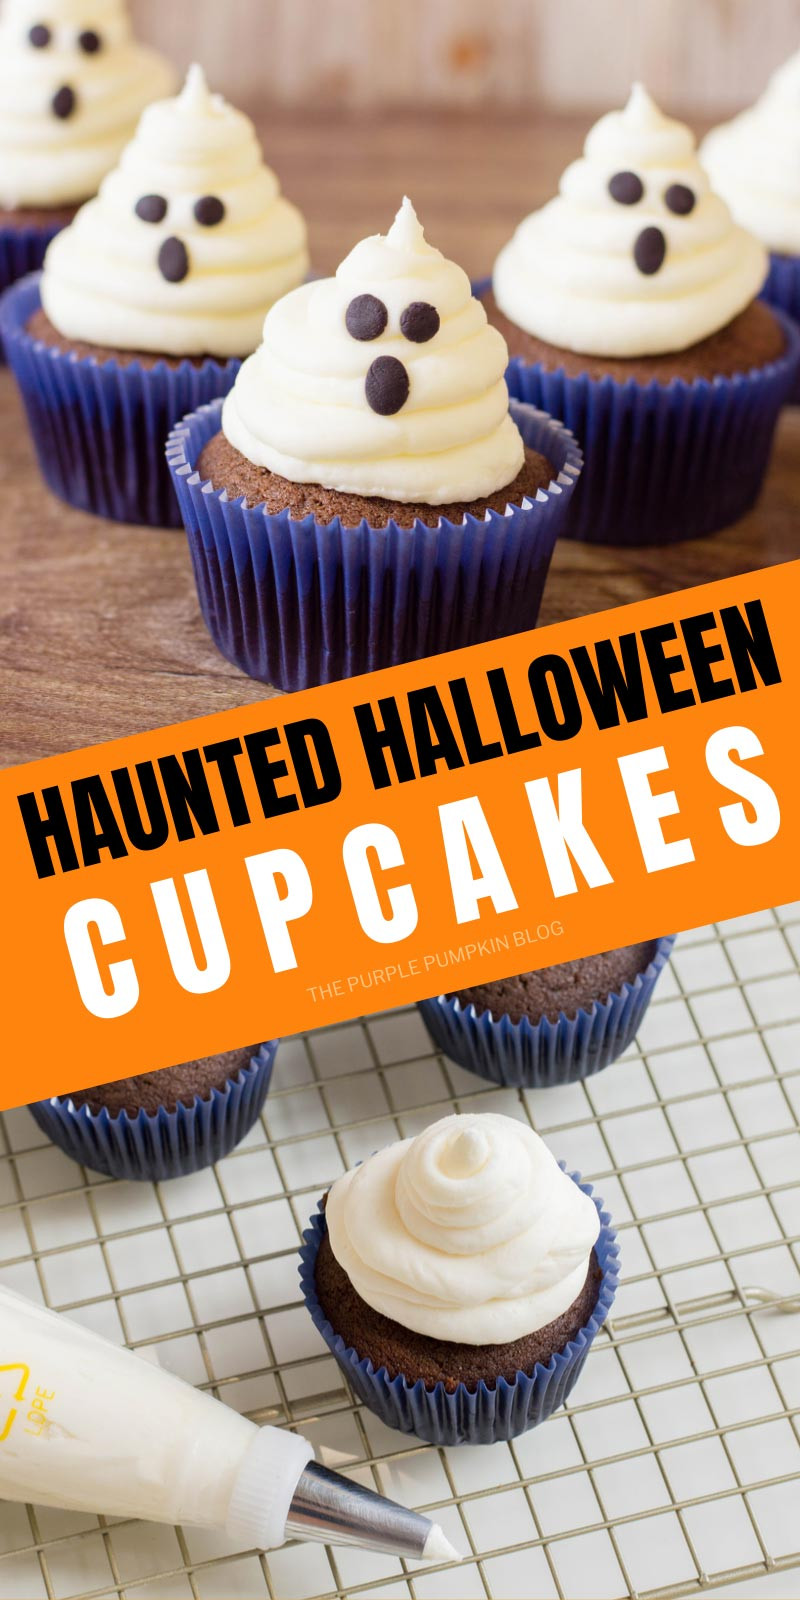 Halloween Cupcakes Recipe
 Haunted Halloween Ghost Cupcakes Recipe A Spooktacular